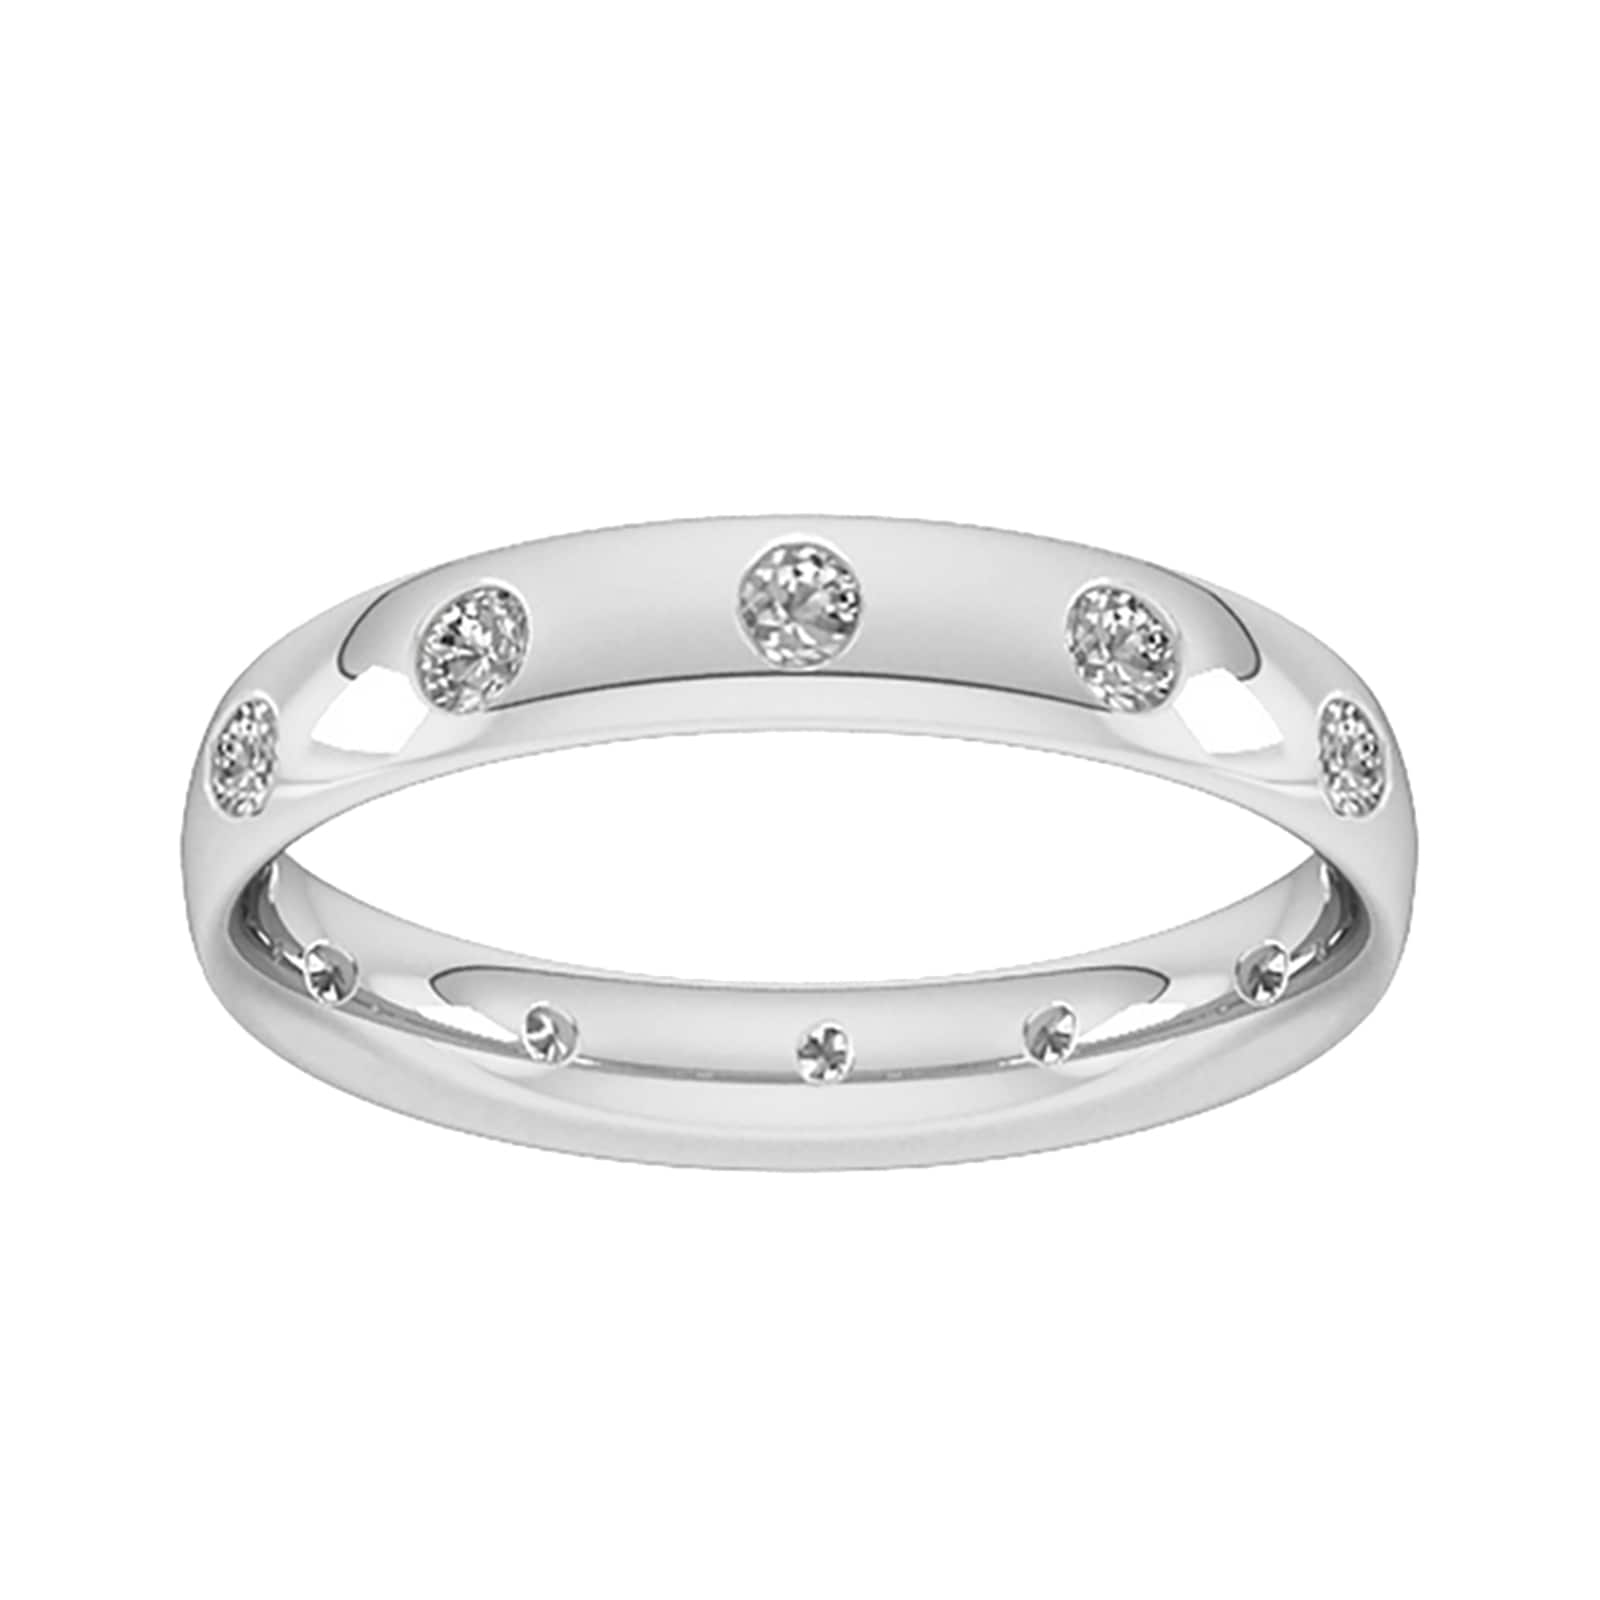 3mm 0.33 Carat Total Weight Twelve Stone Brilliant Cut Rub Over Diamond Set Wedding Ring In 18 Carat White Gold - Ring Size K.5